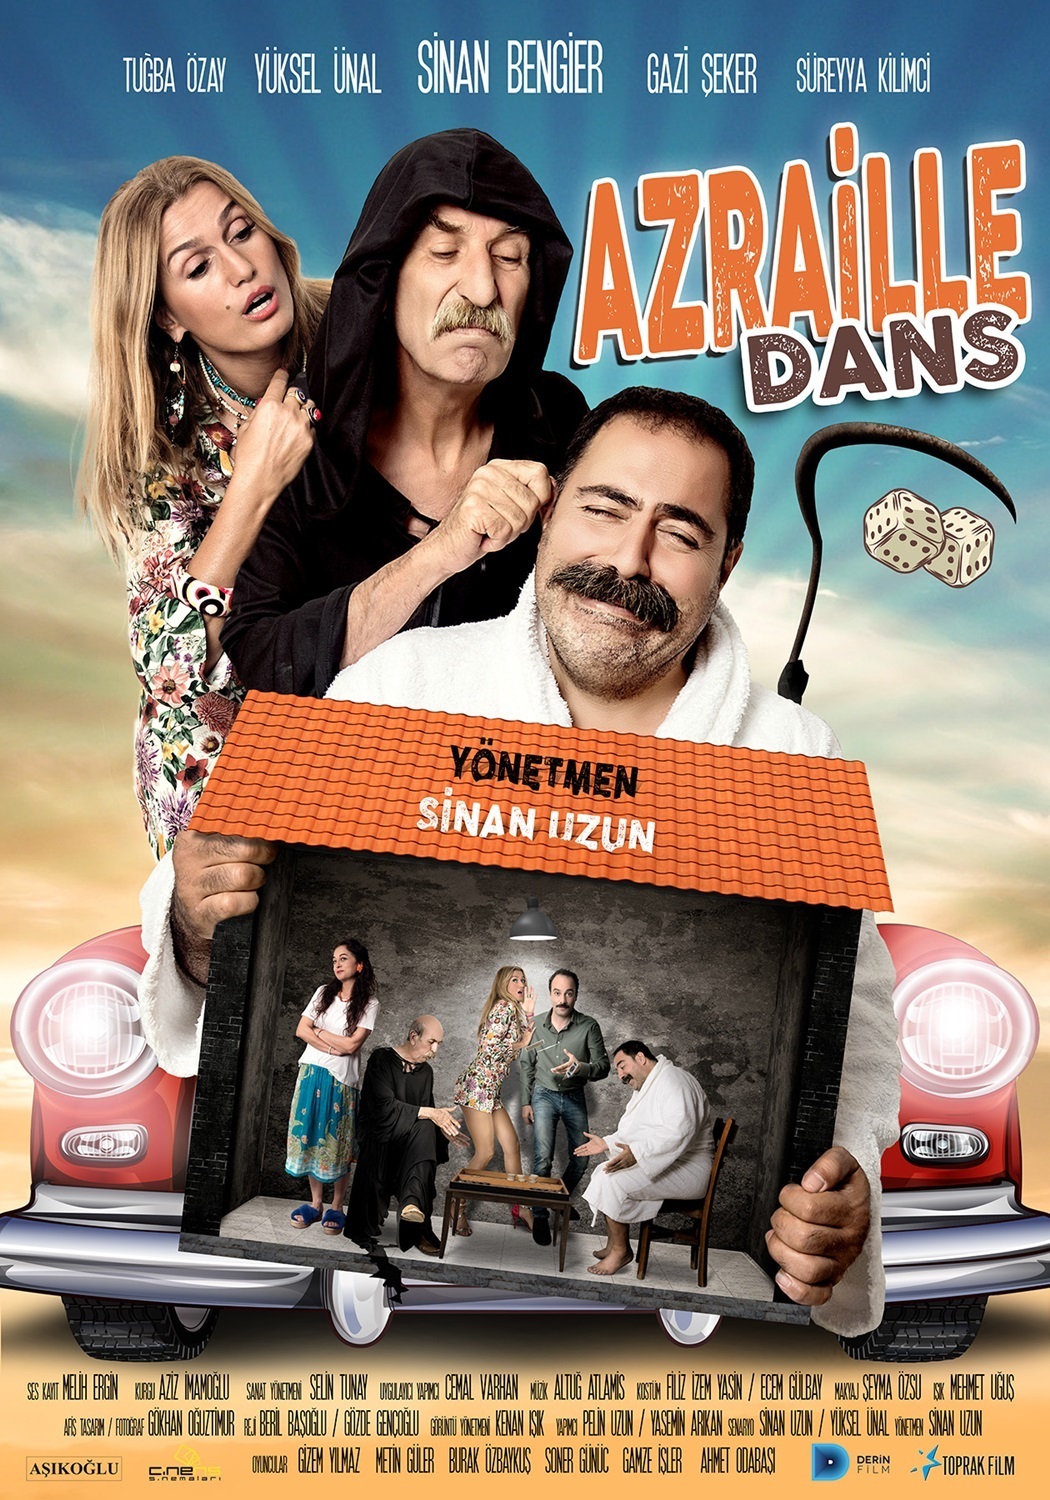 Uzun Sinan در صحنه فیلم سینمایی Azraille Dans